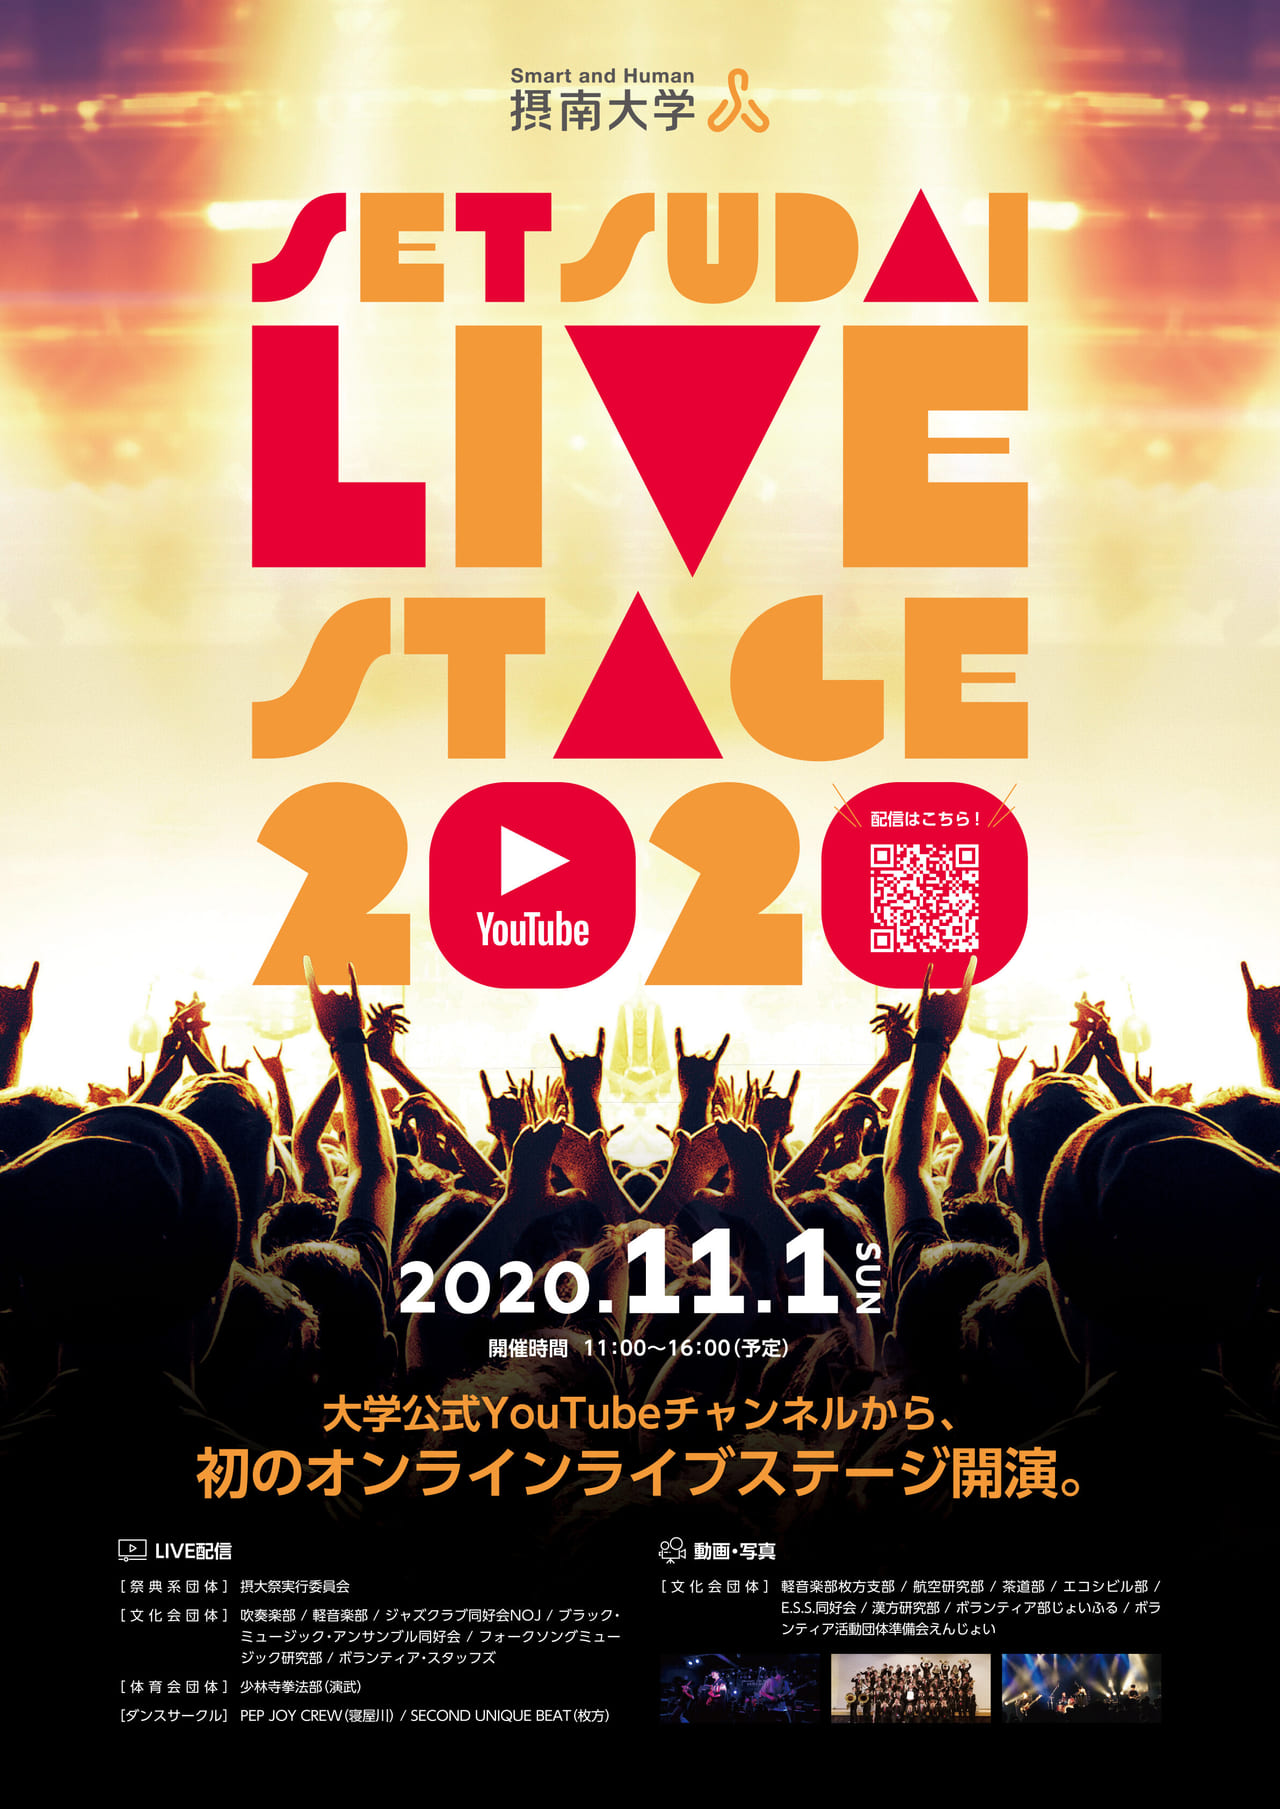 SETSUDAI LIVE STAGE 2020